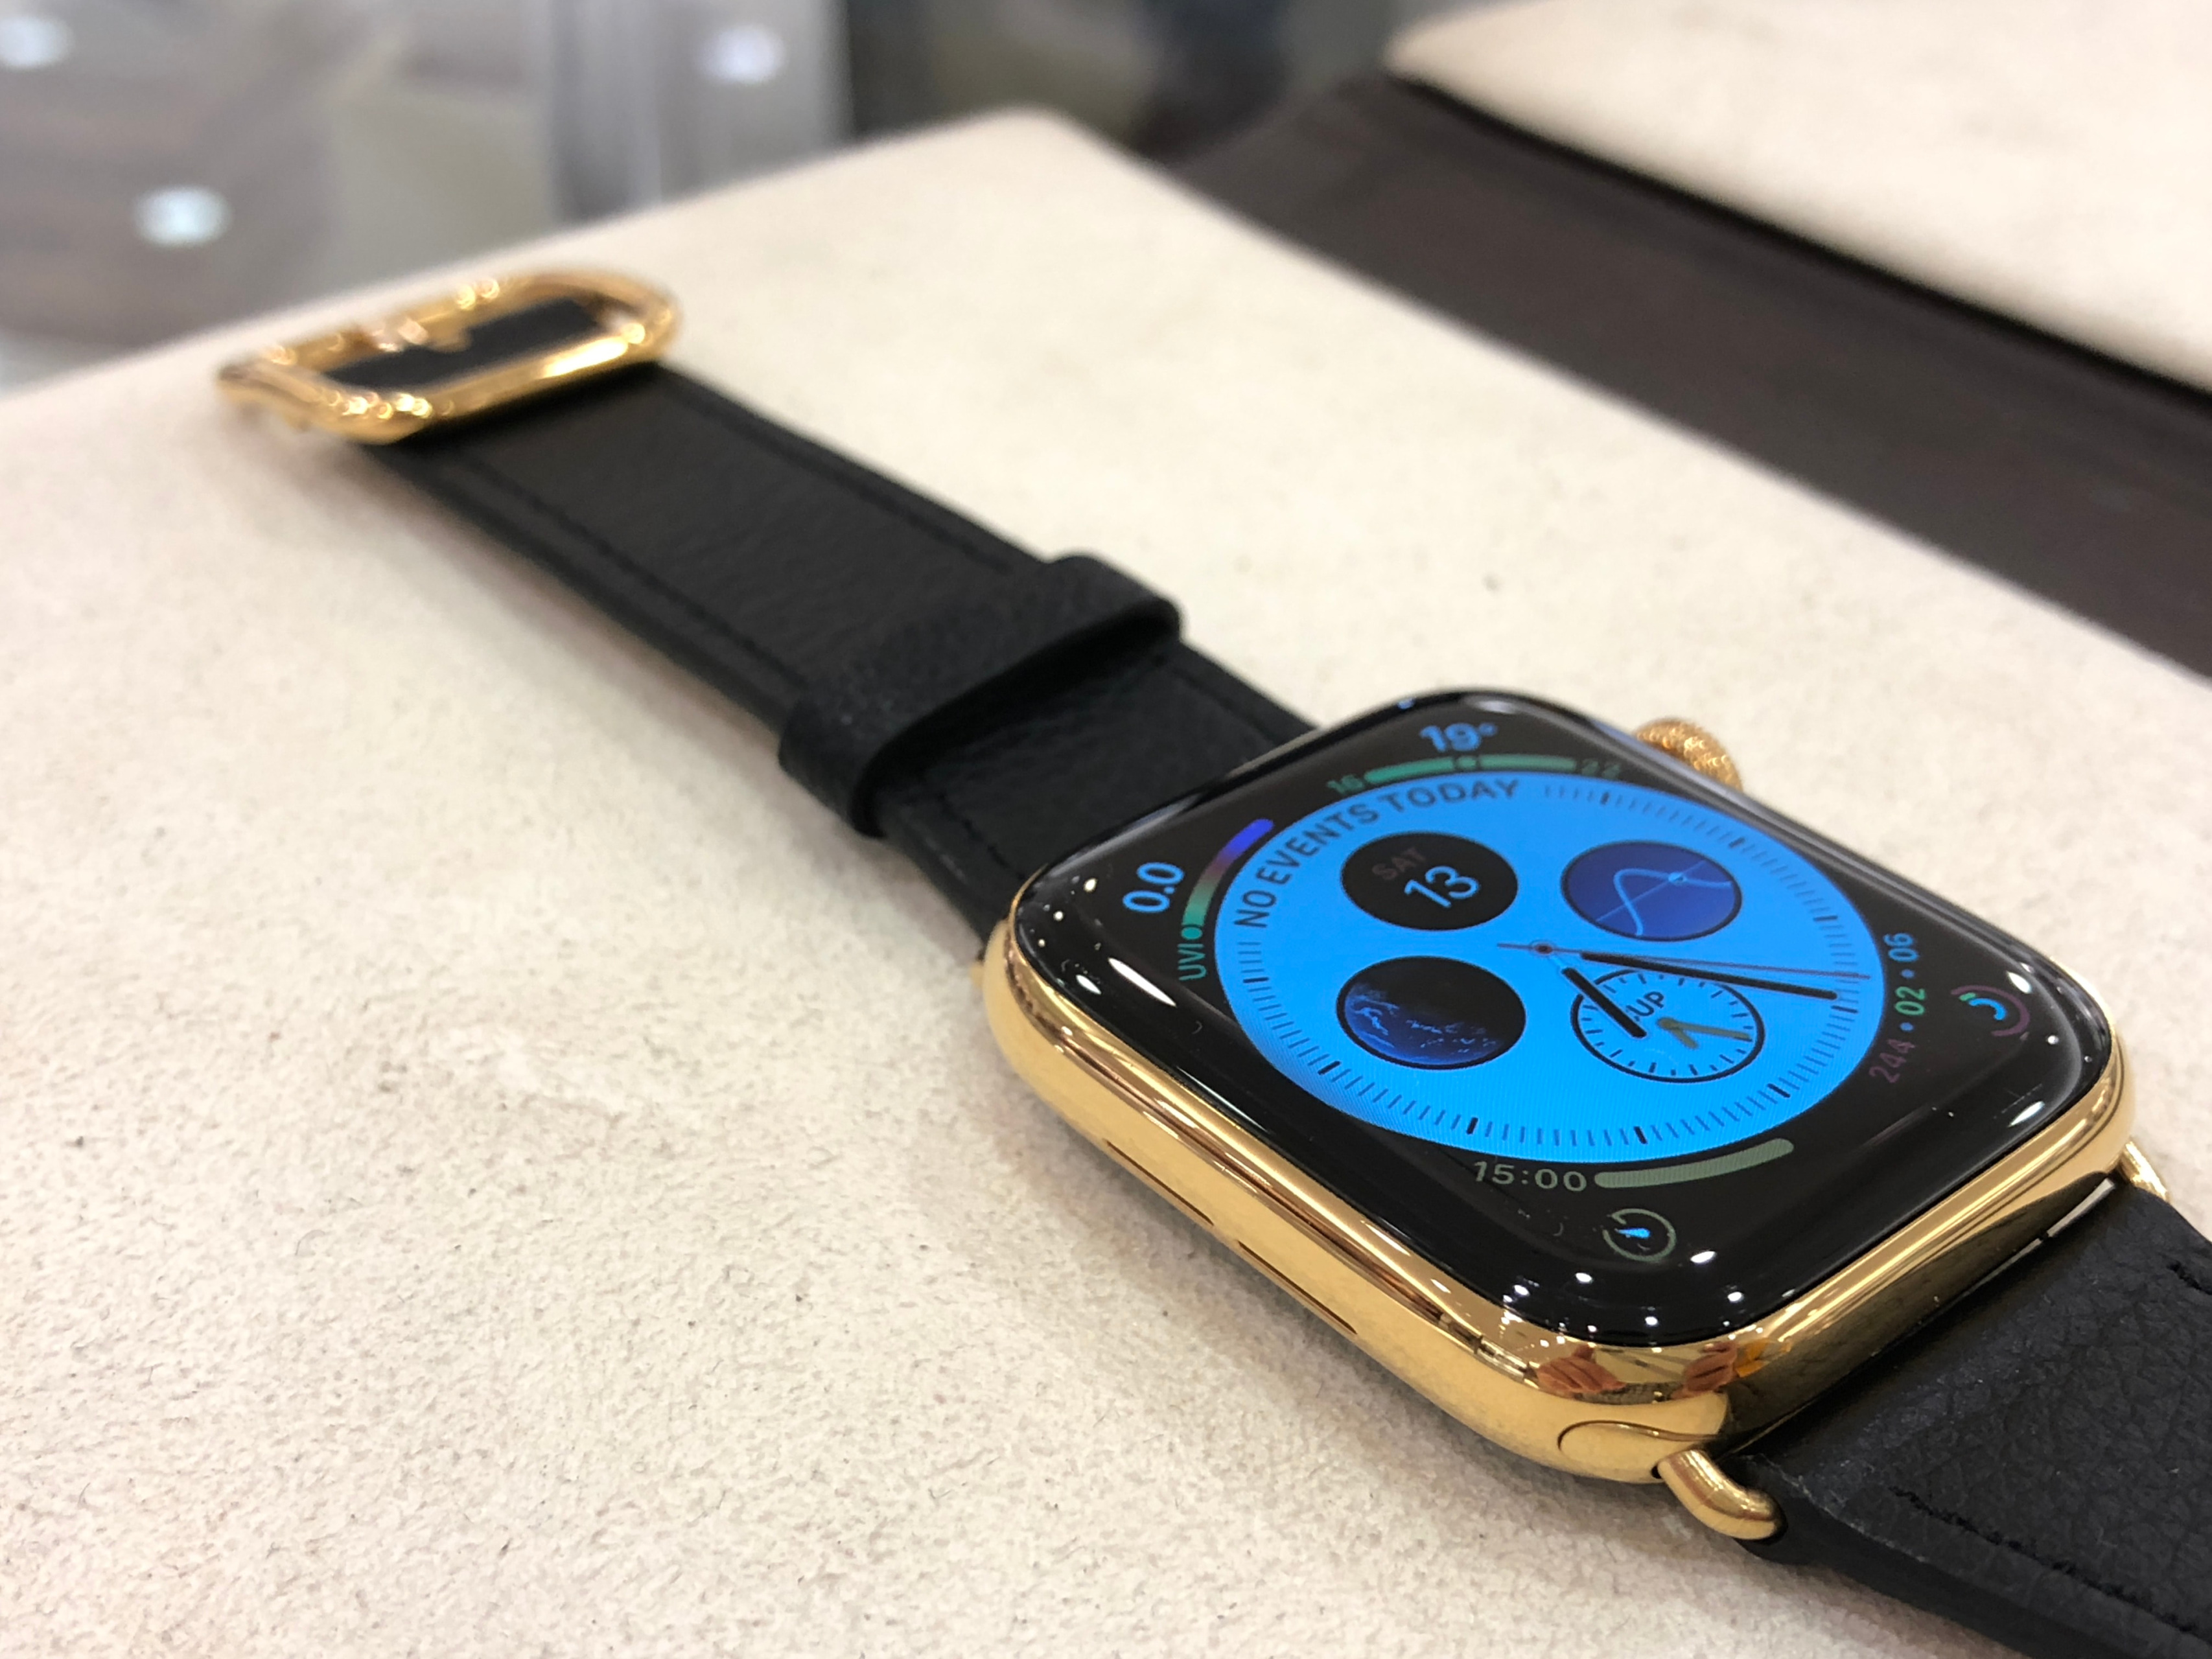 apple watch series 4 gold